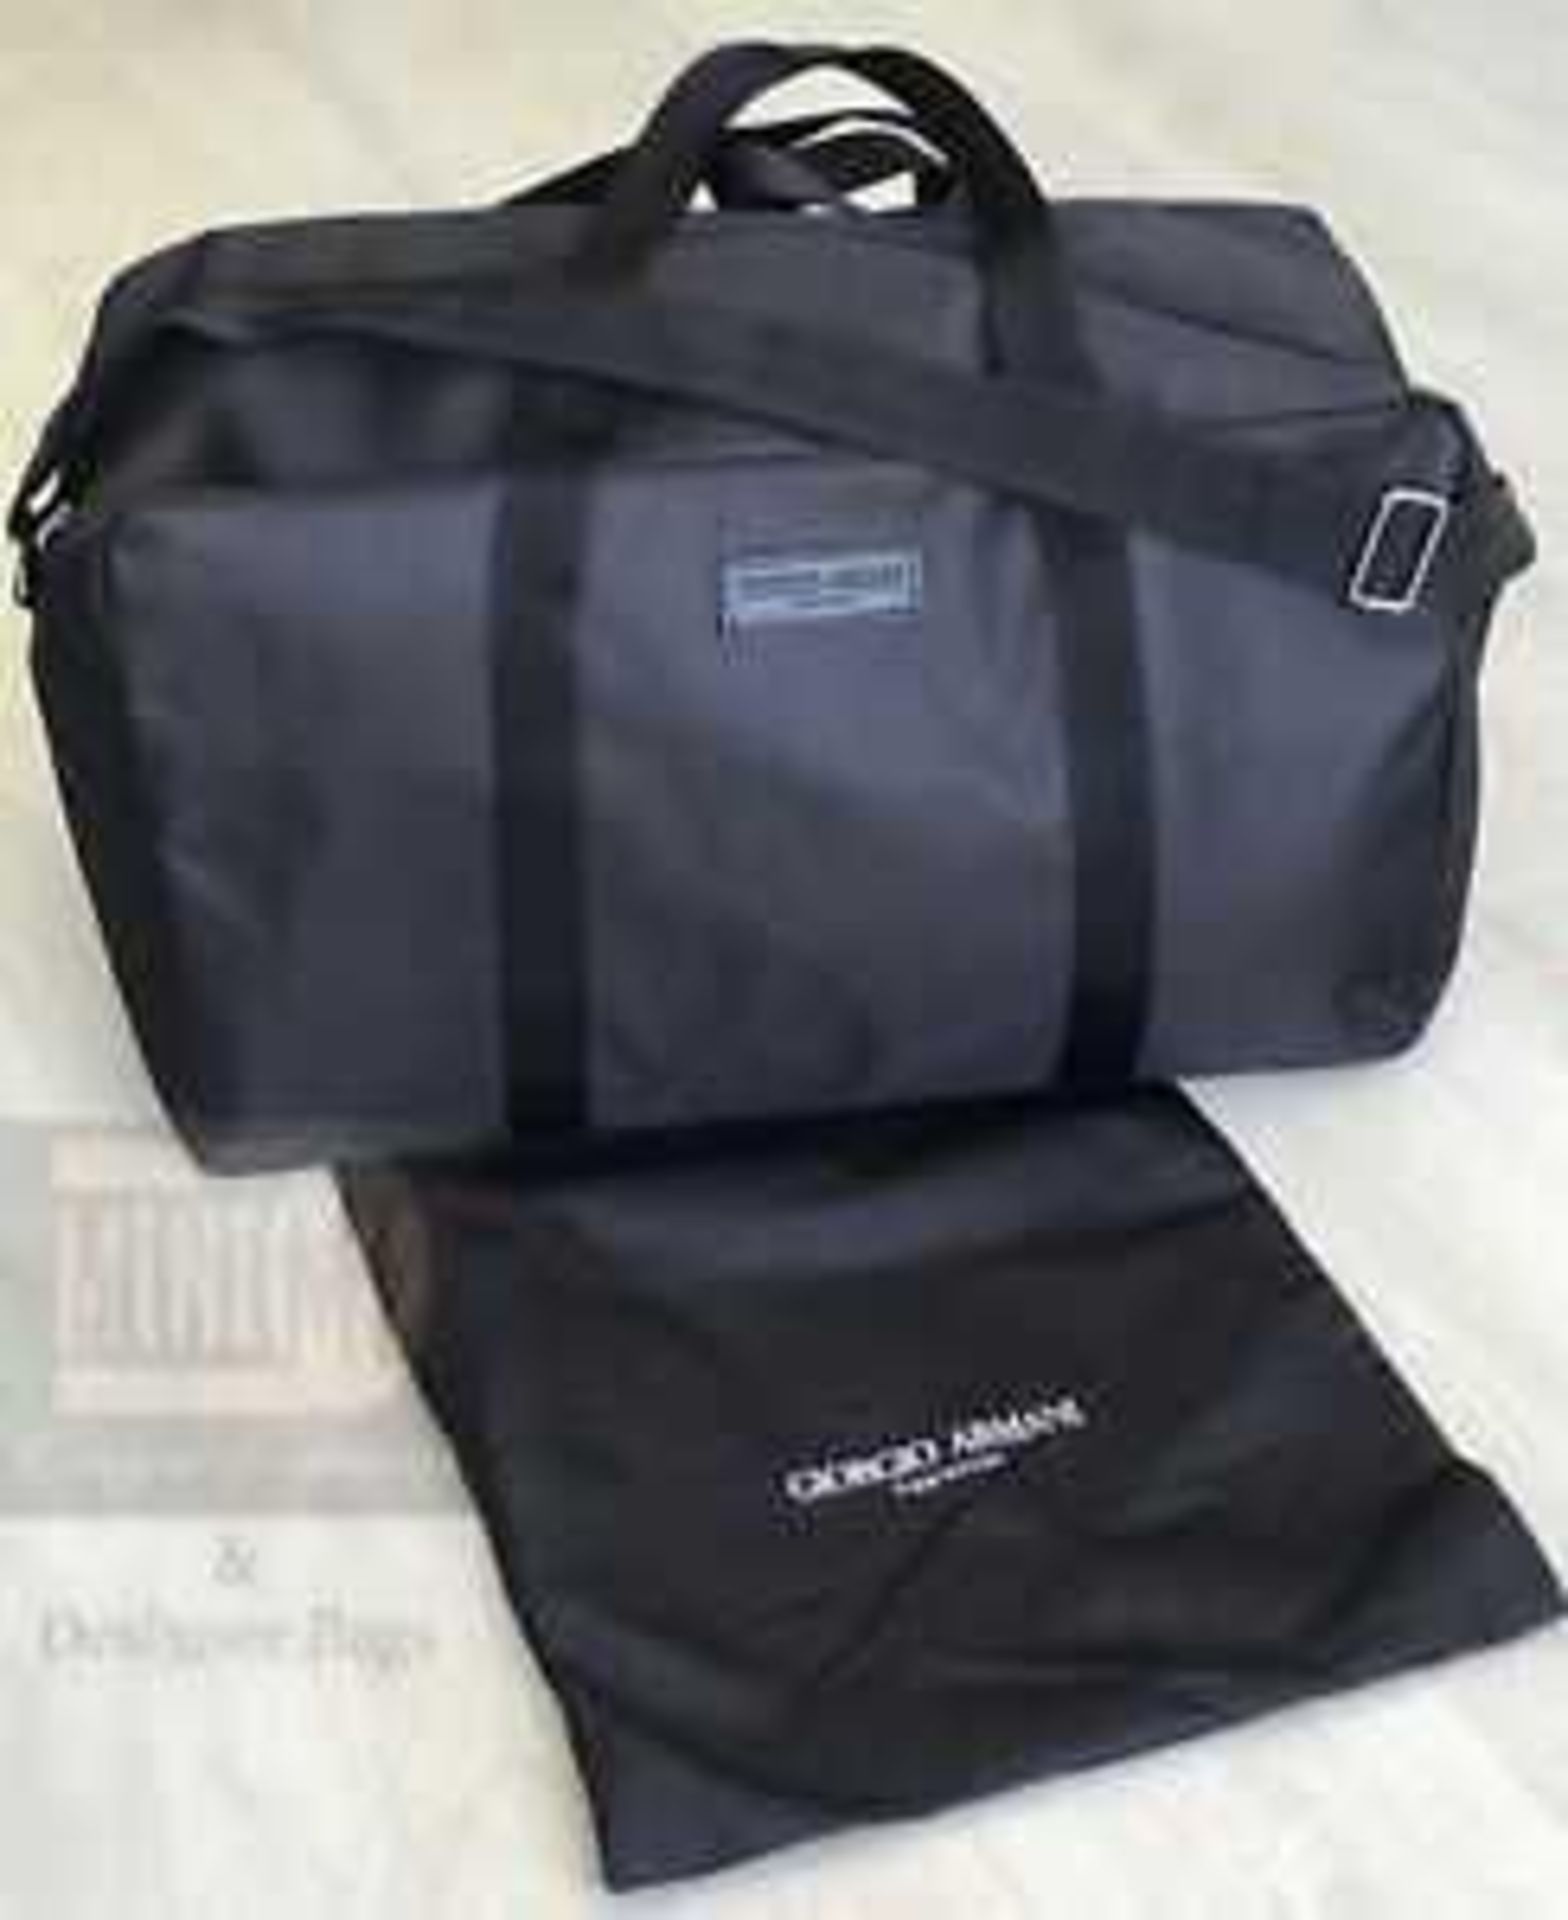 RRP £70 Brand New And Sealed Giorgio Armani Fragrances Travelbag